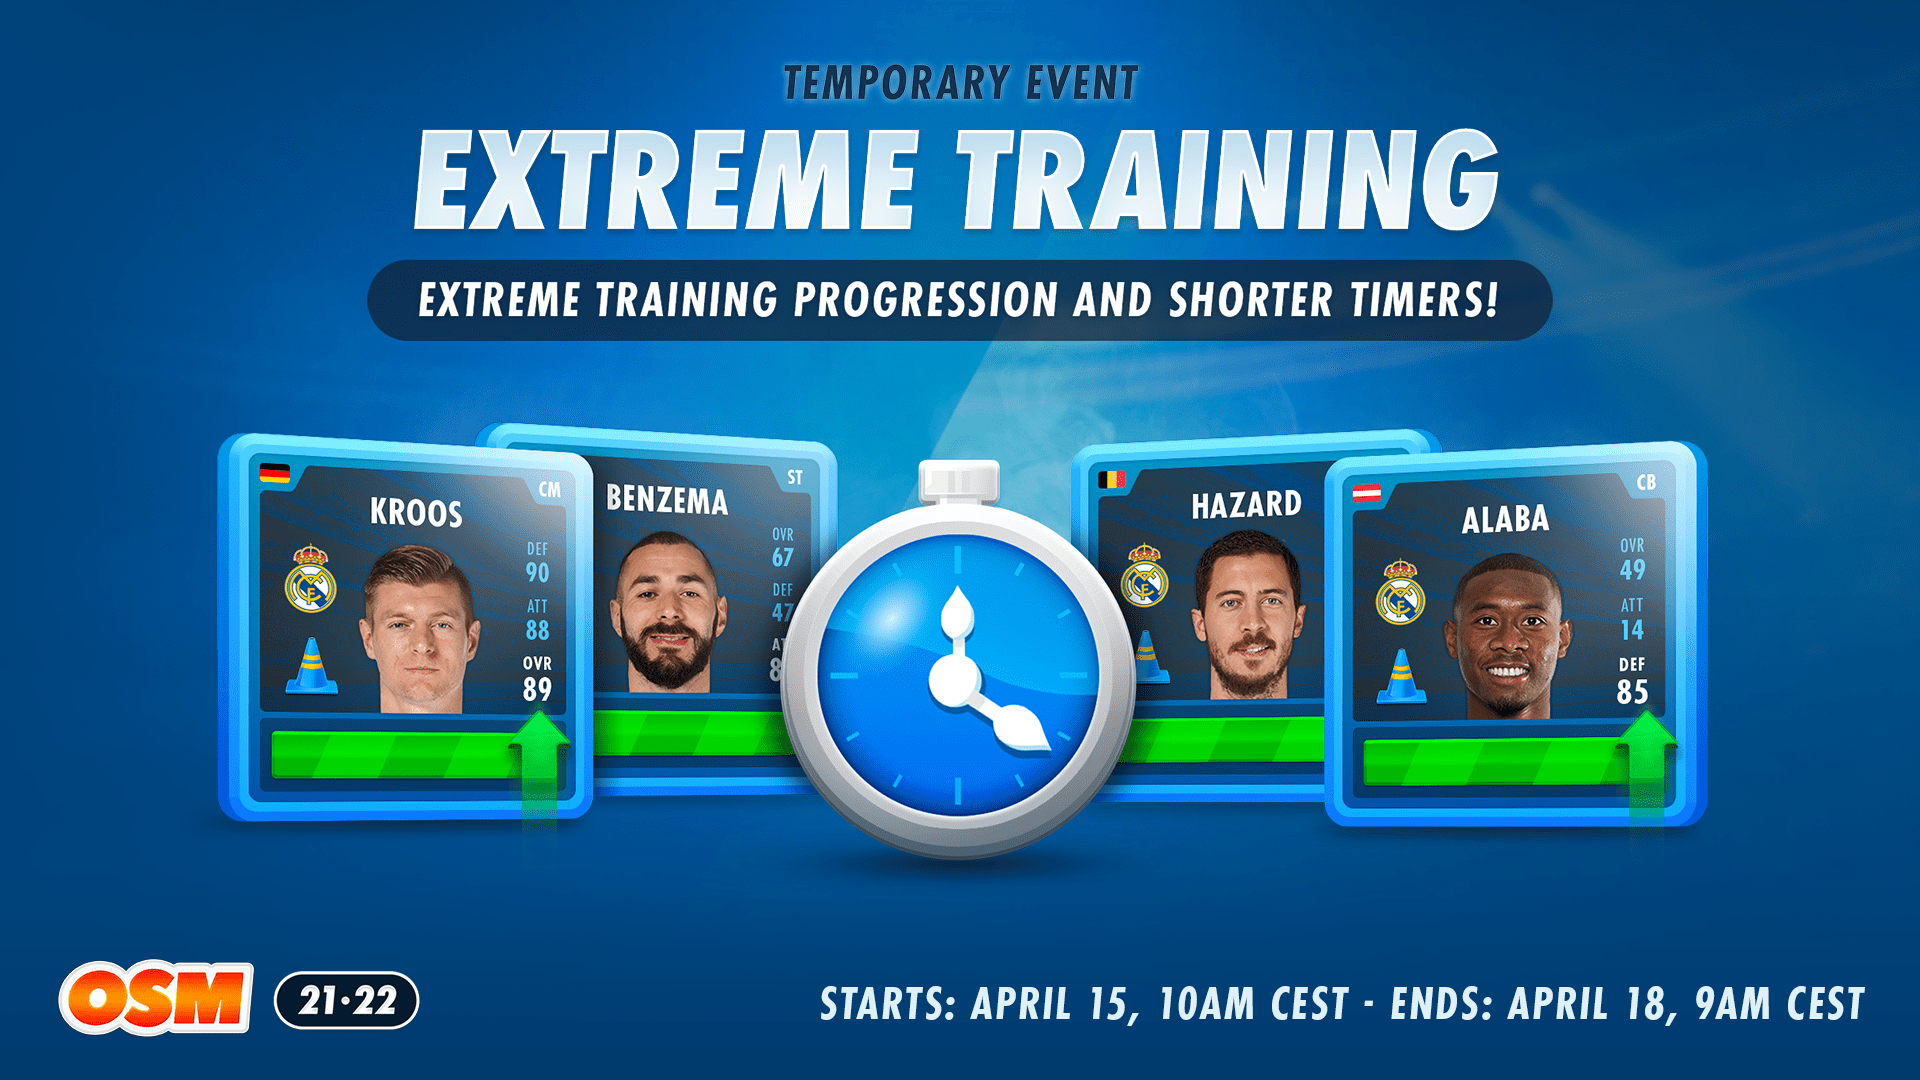 Forum_Extreme Training_REDDIT-min.png